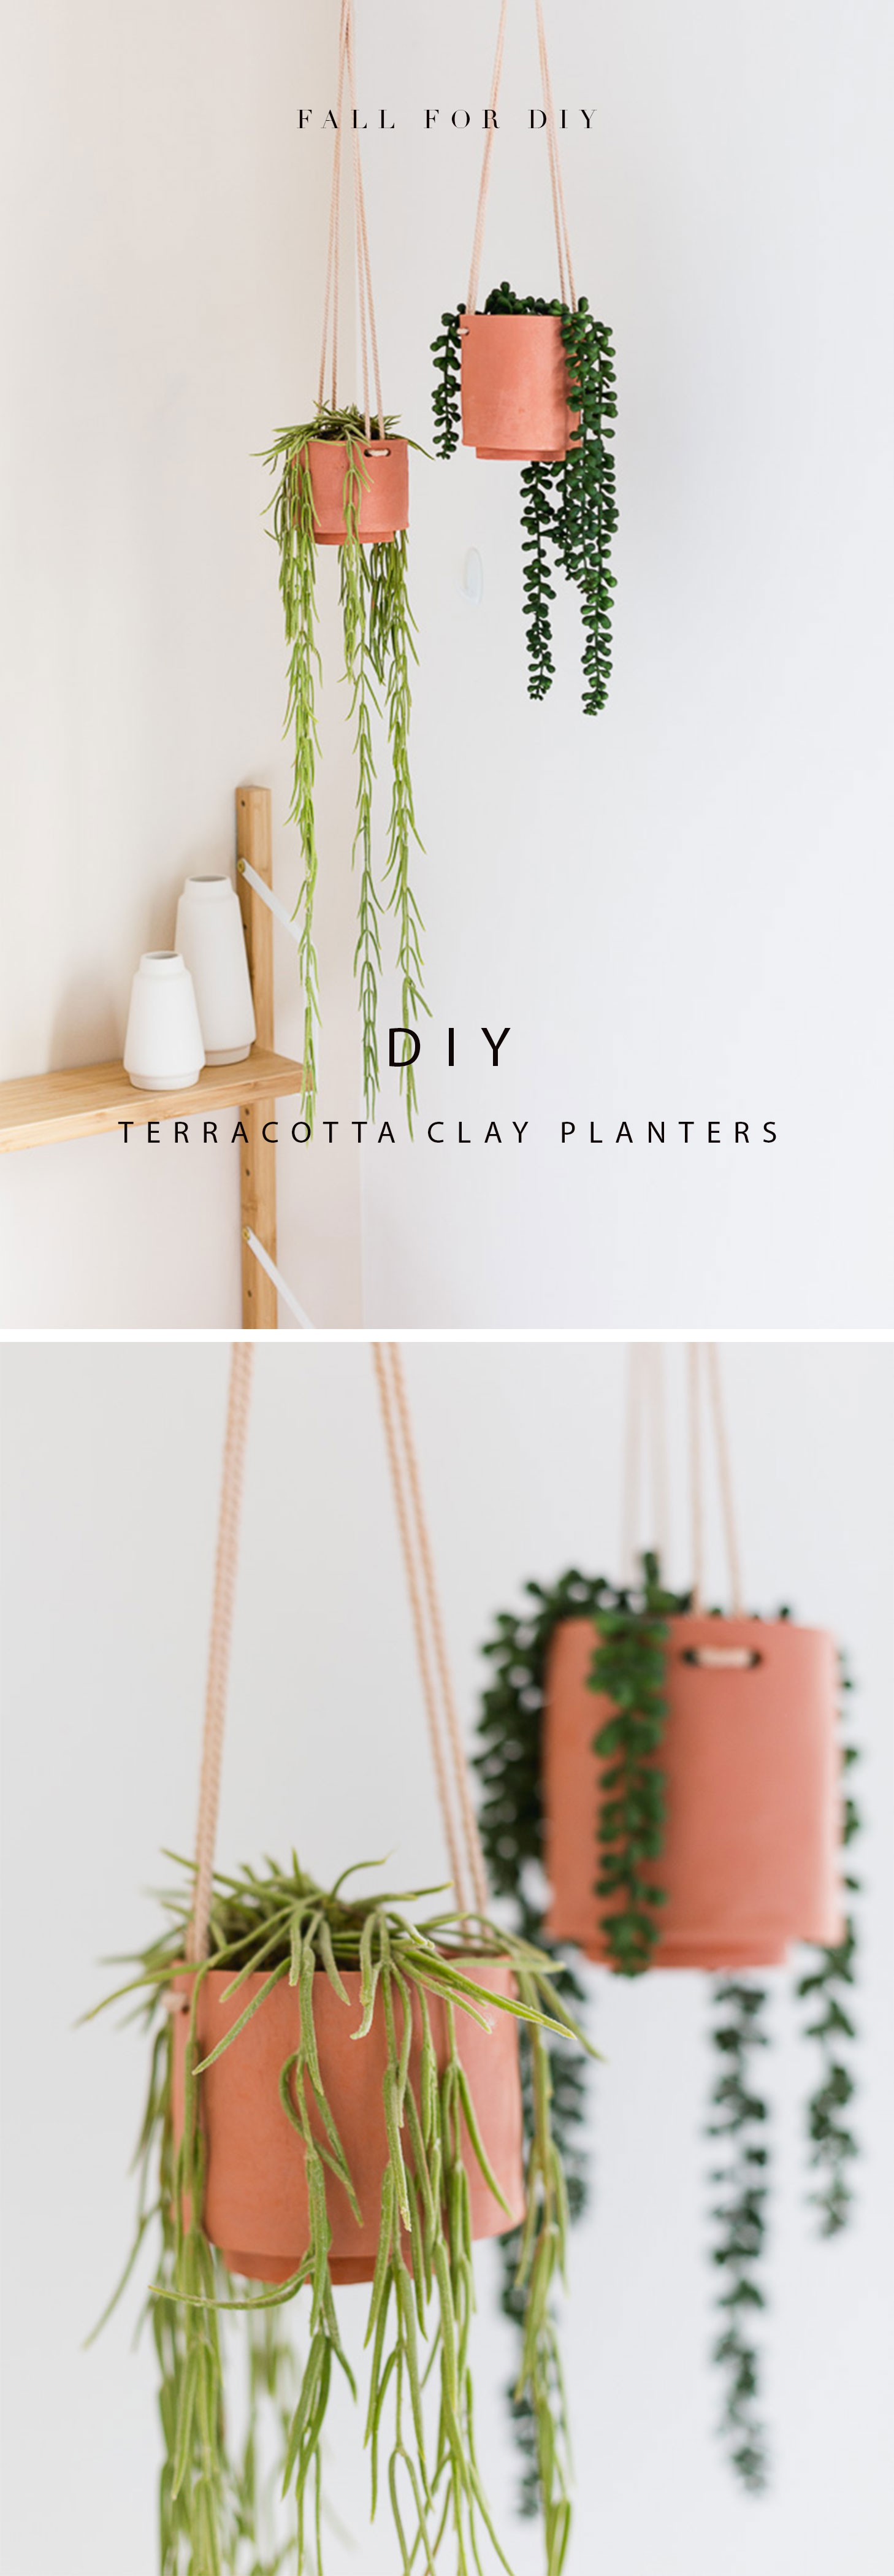 http://fallfordiy.com/wp-content/uploads/2019/03/DIY-Terracotta-Clay-Hanging-Planters.jpg